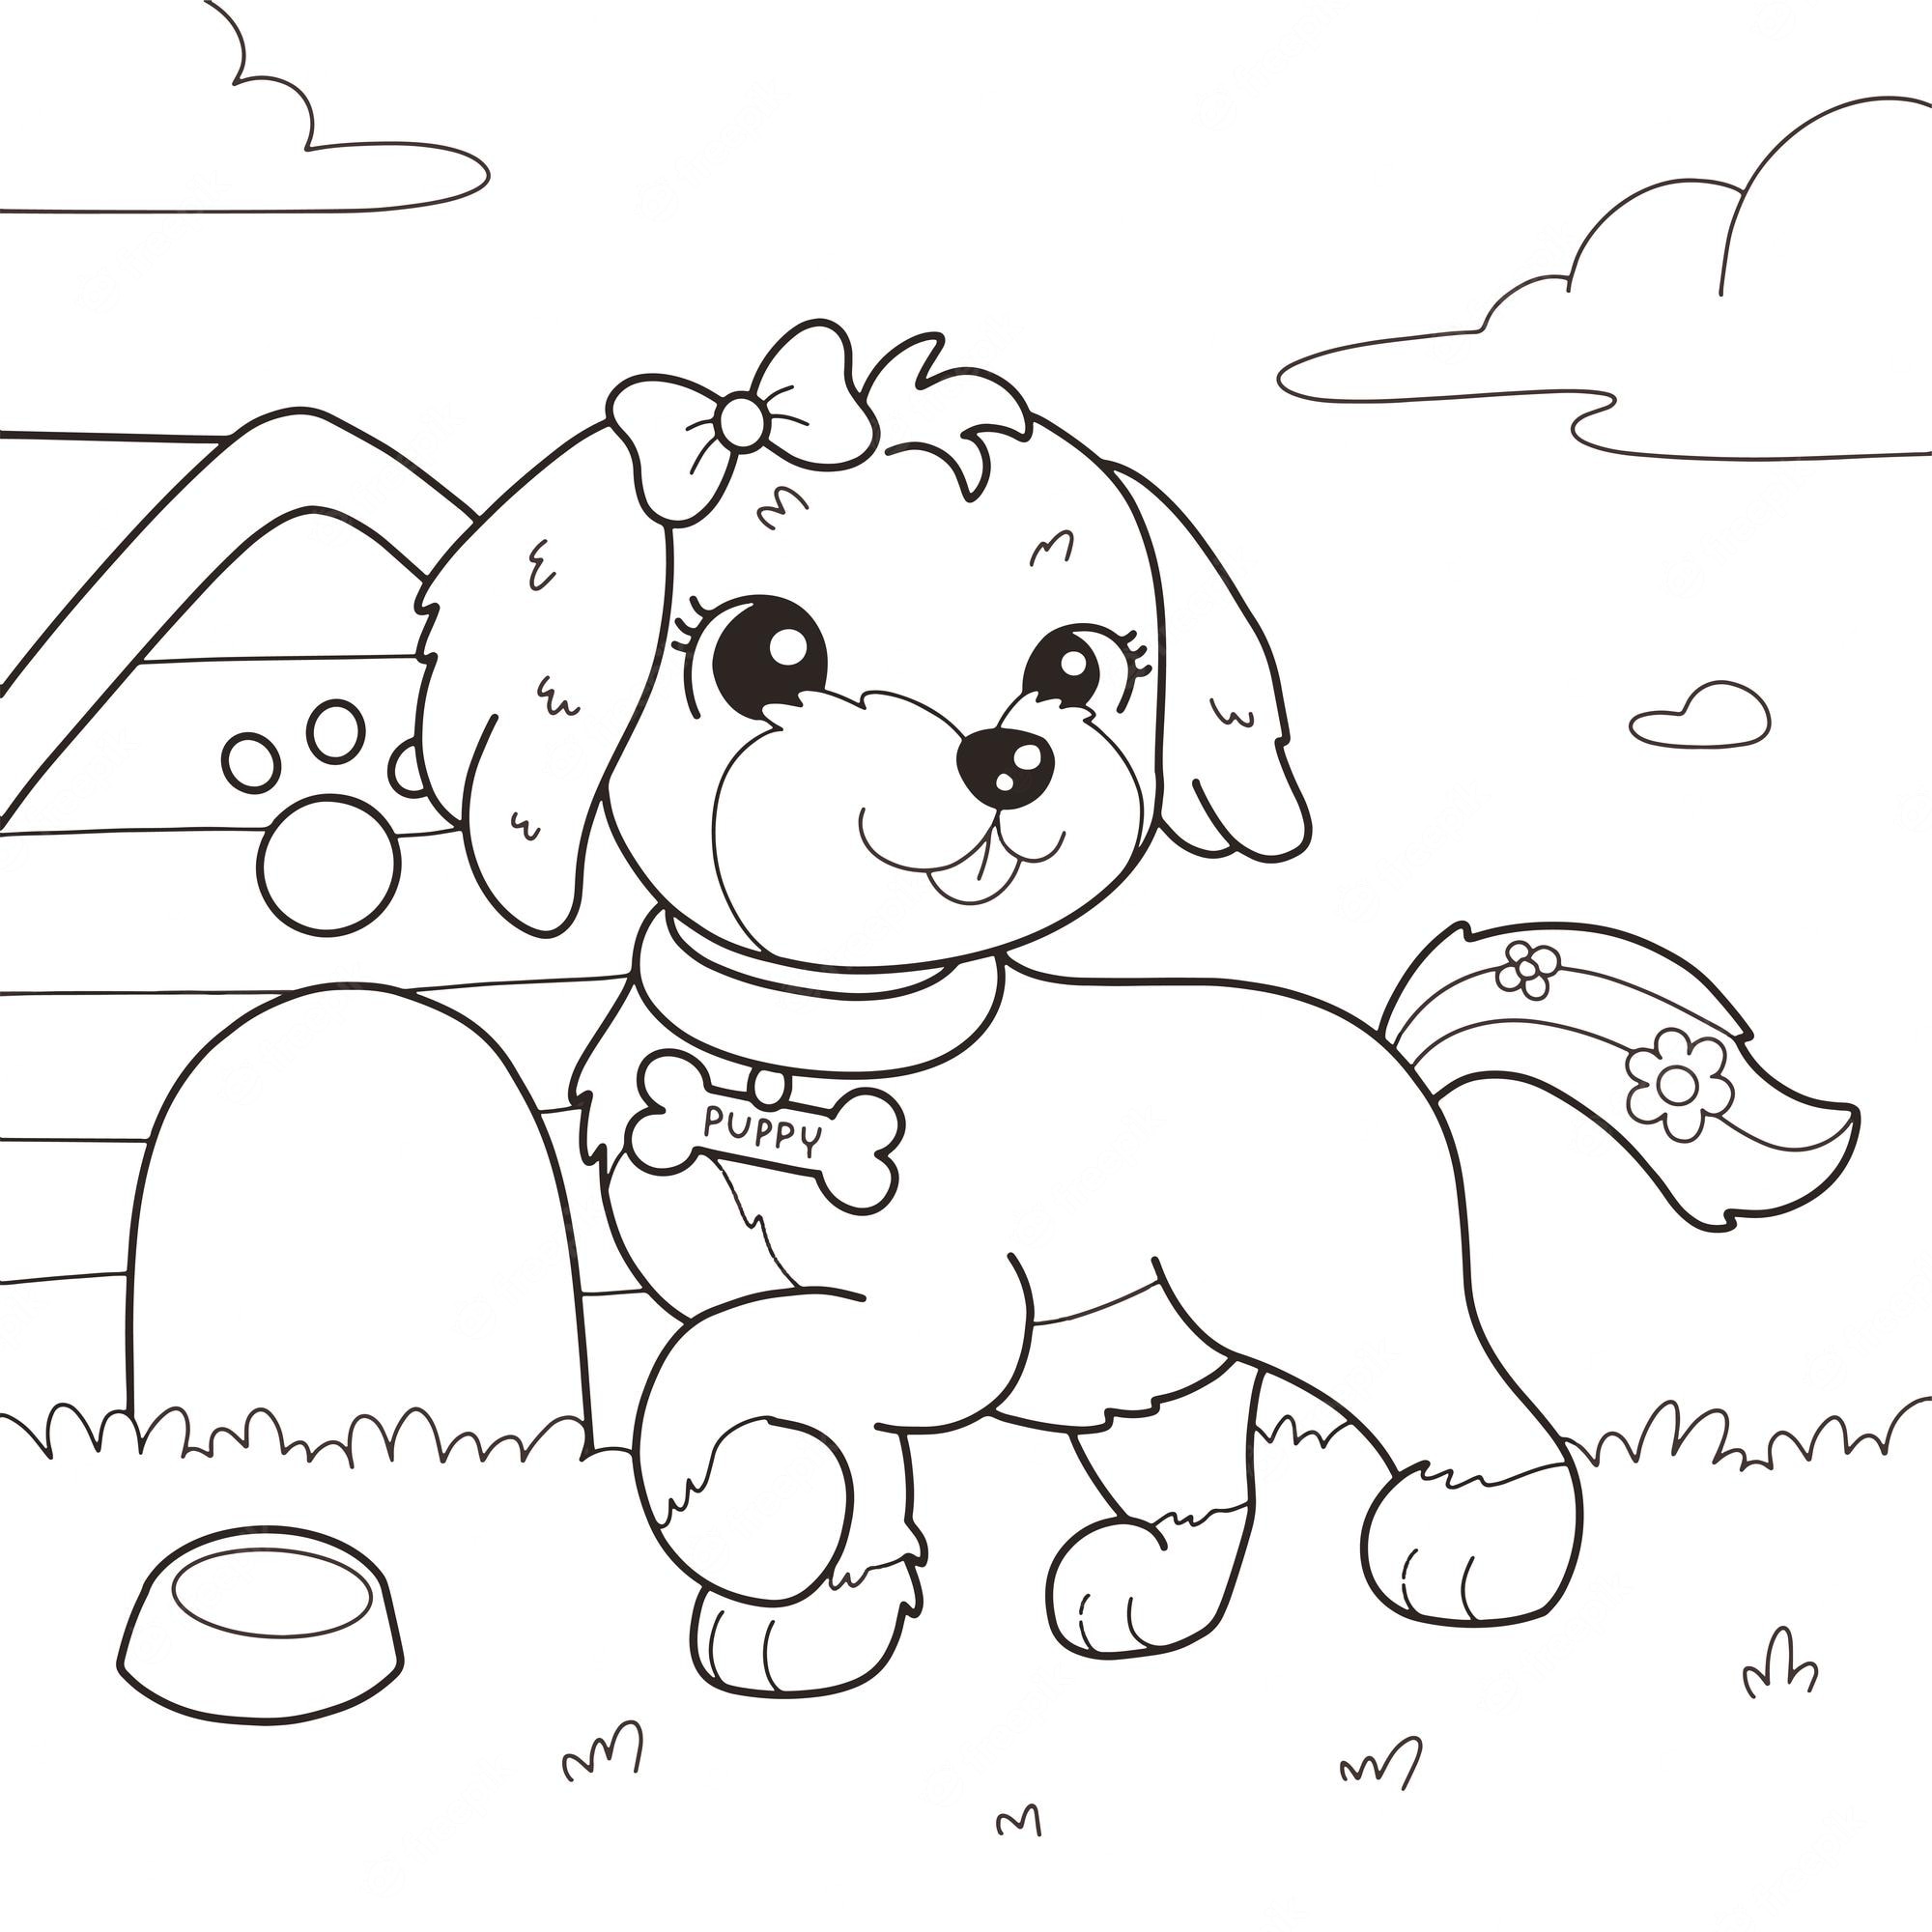 Cockapoo puppy coloring page | Download on Freepik